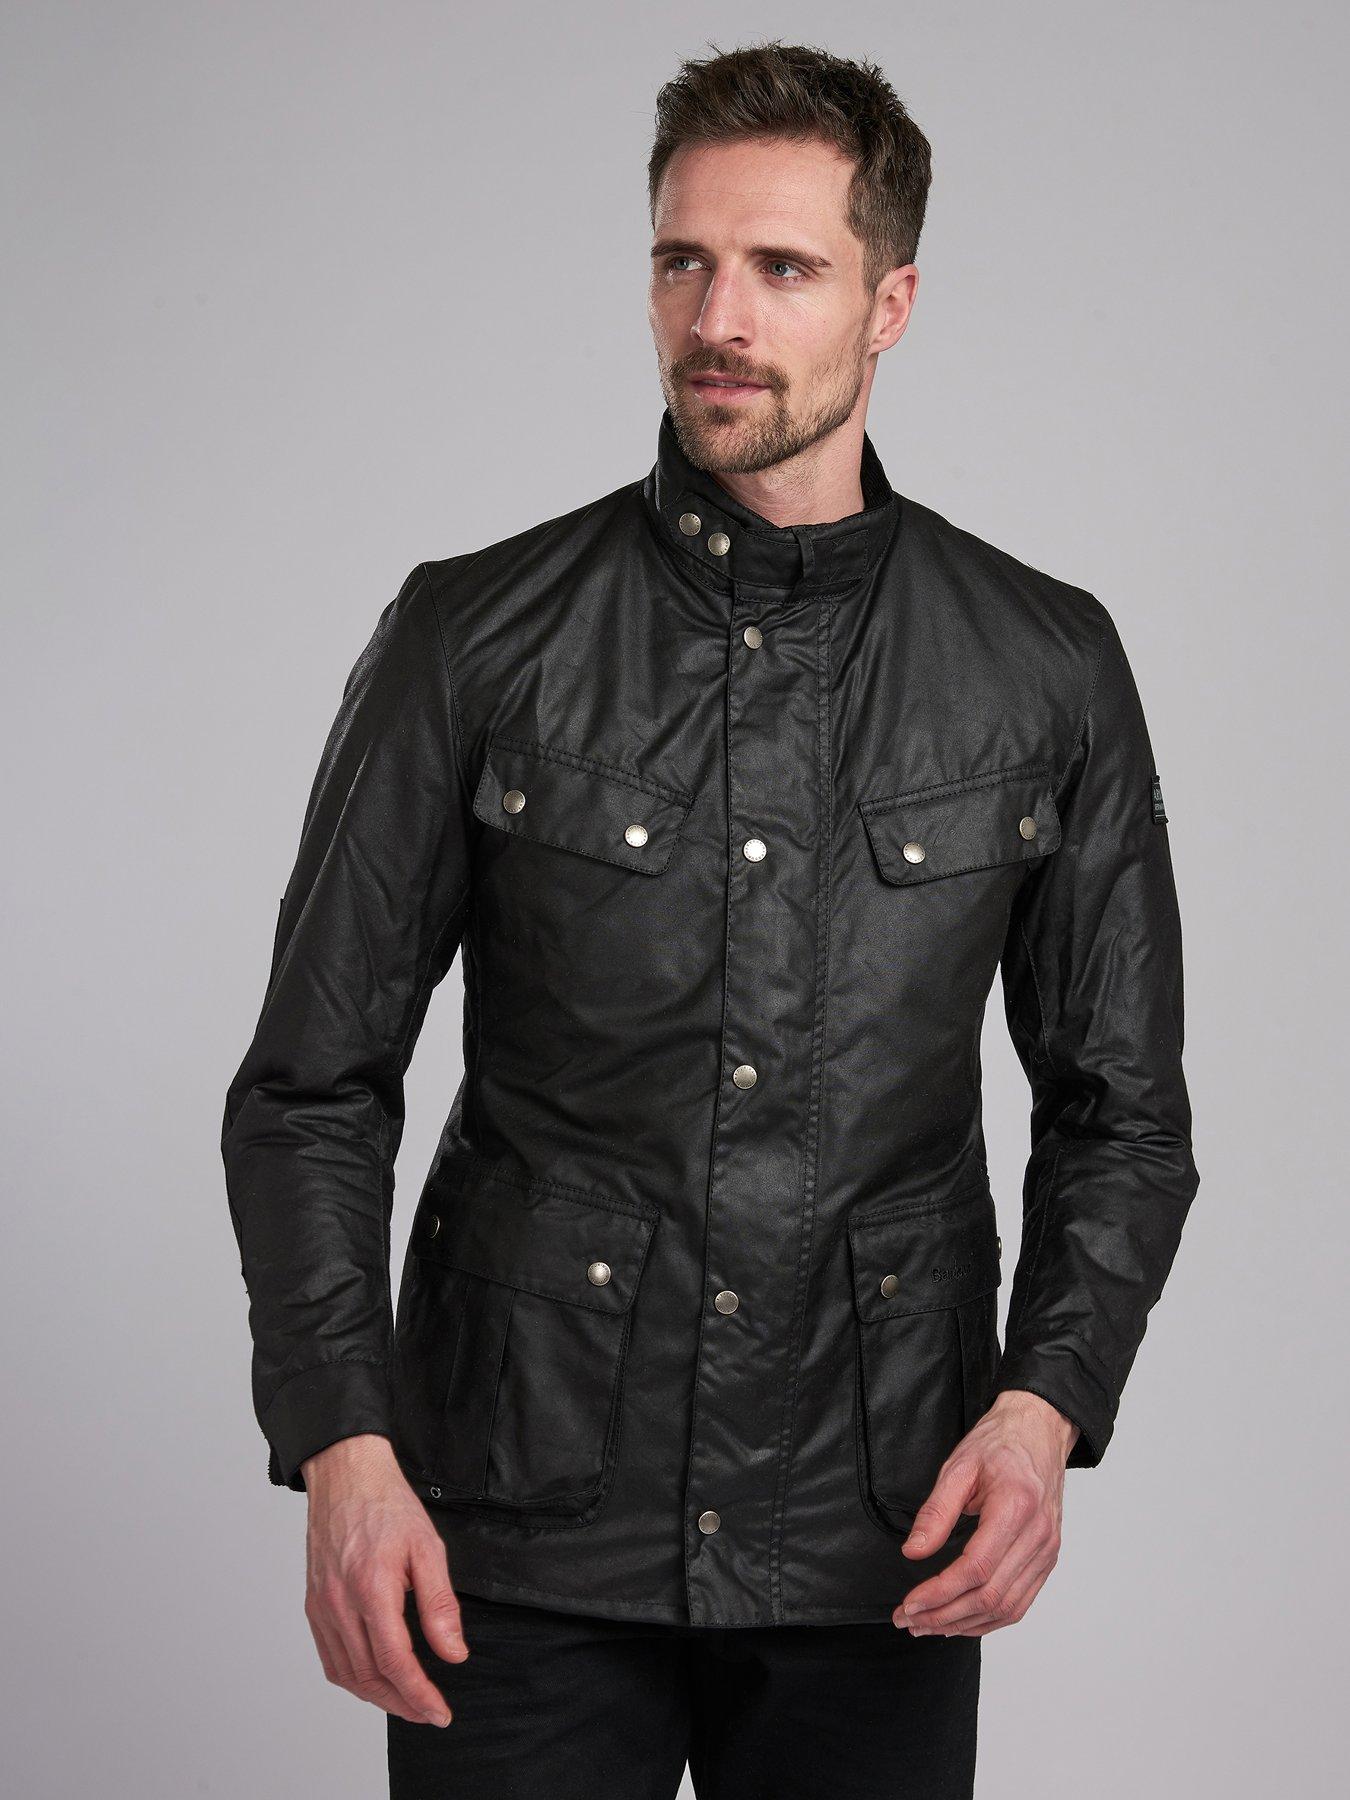 Jackets | Barbour Coats 